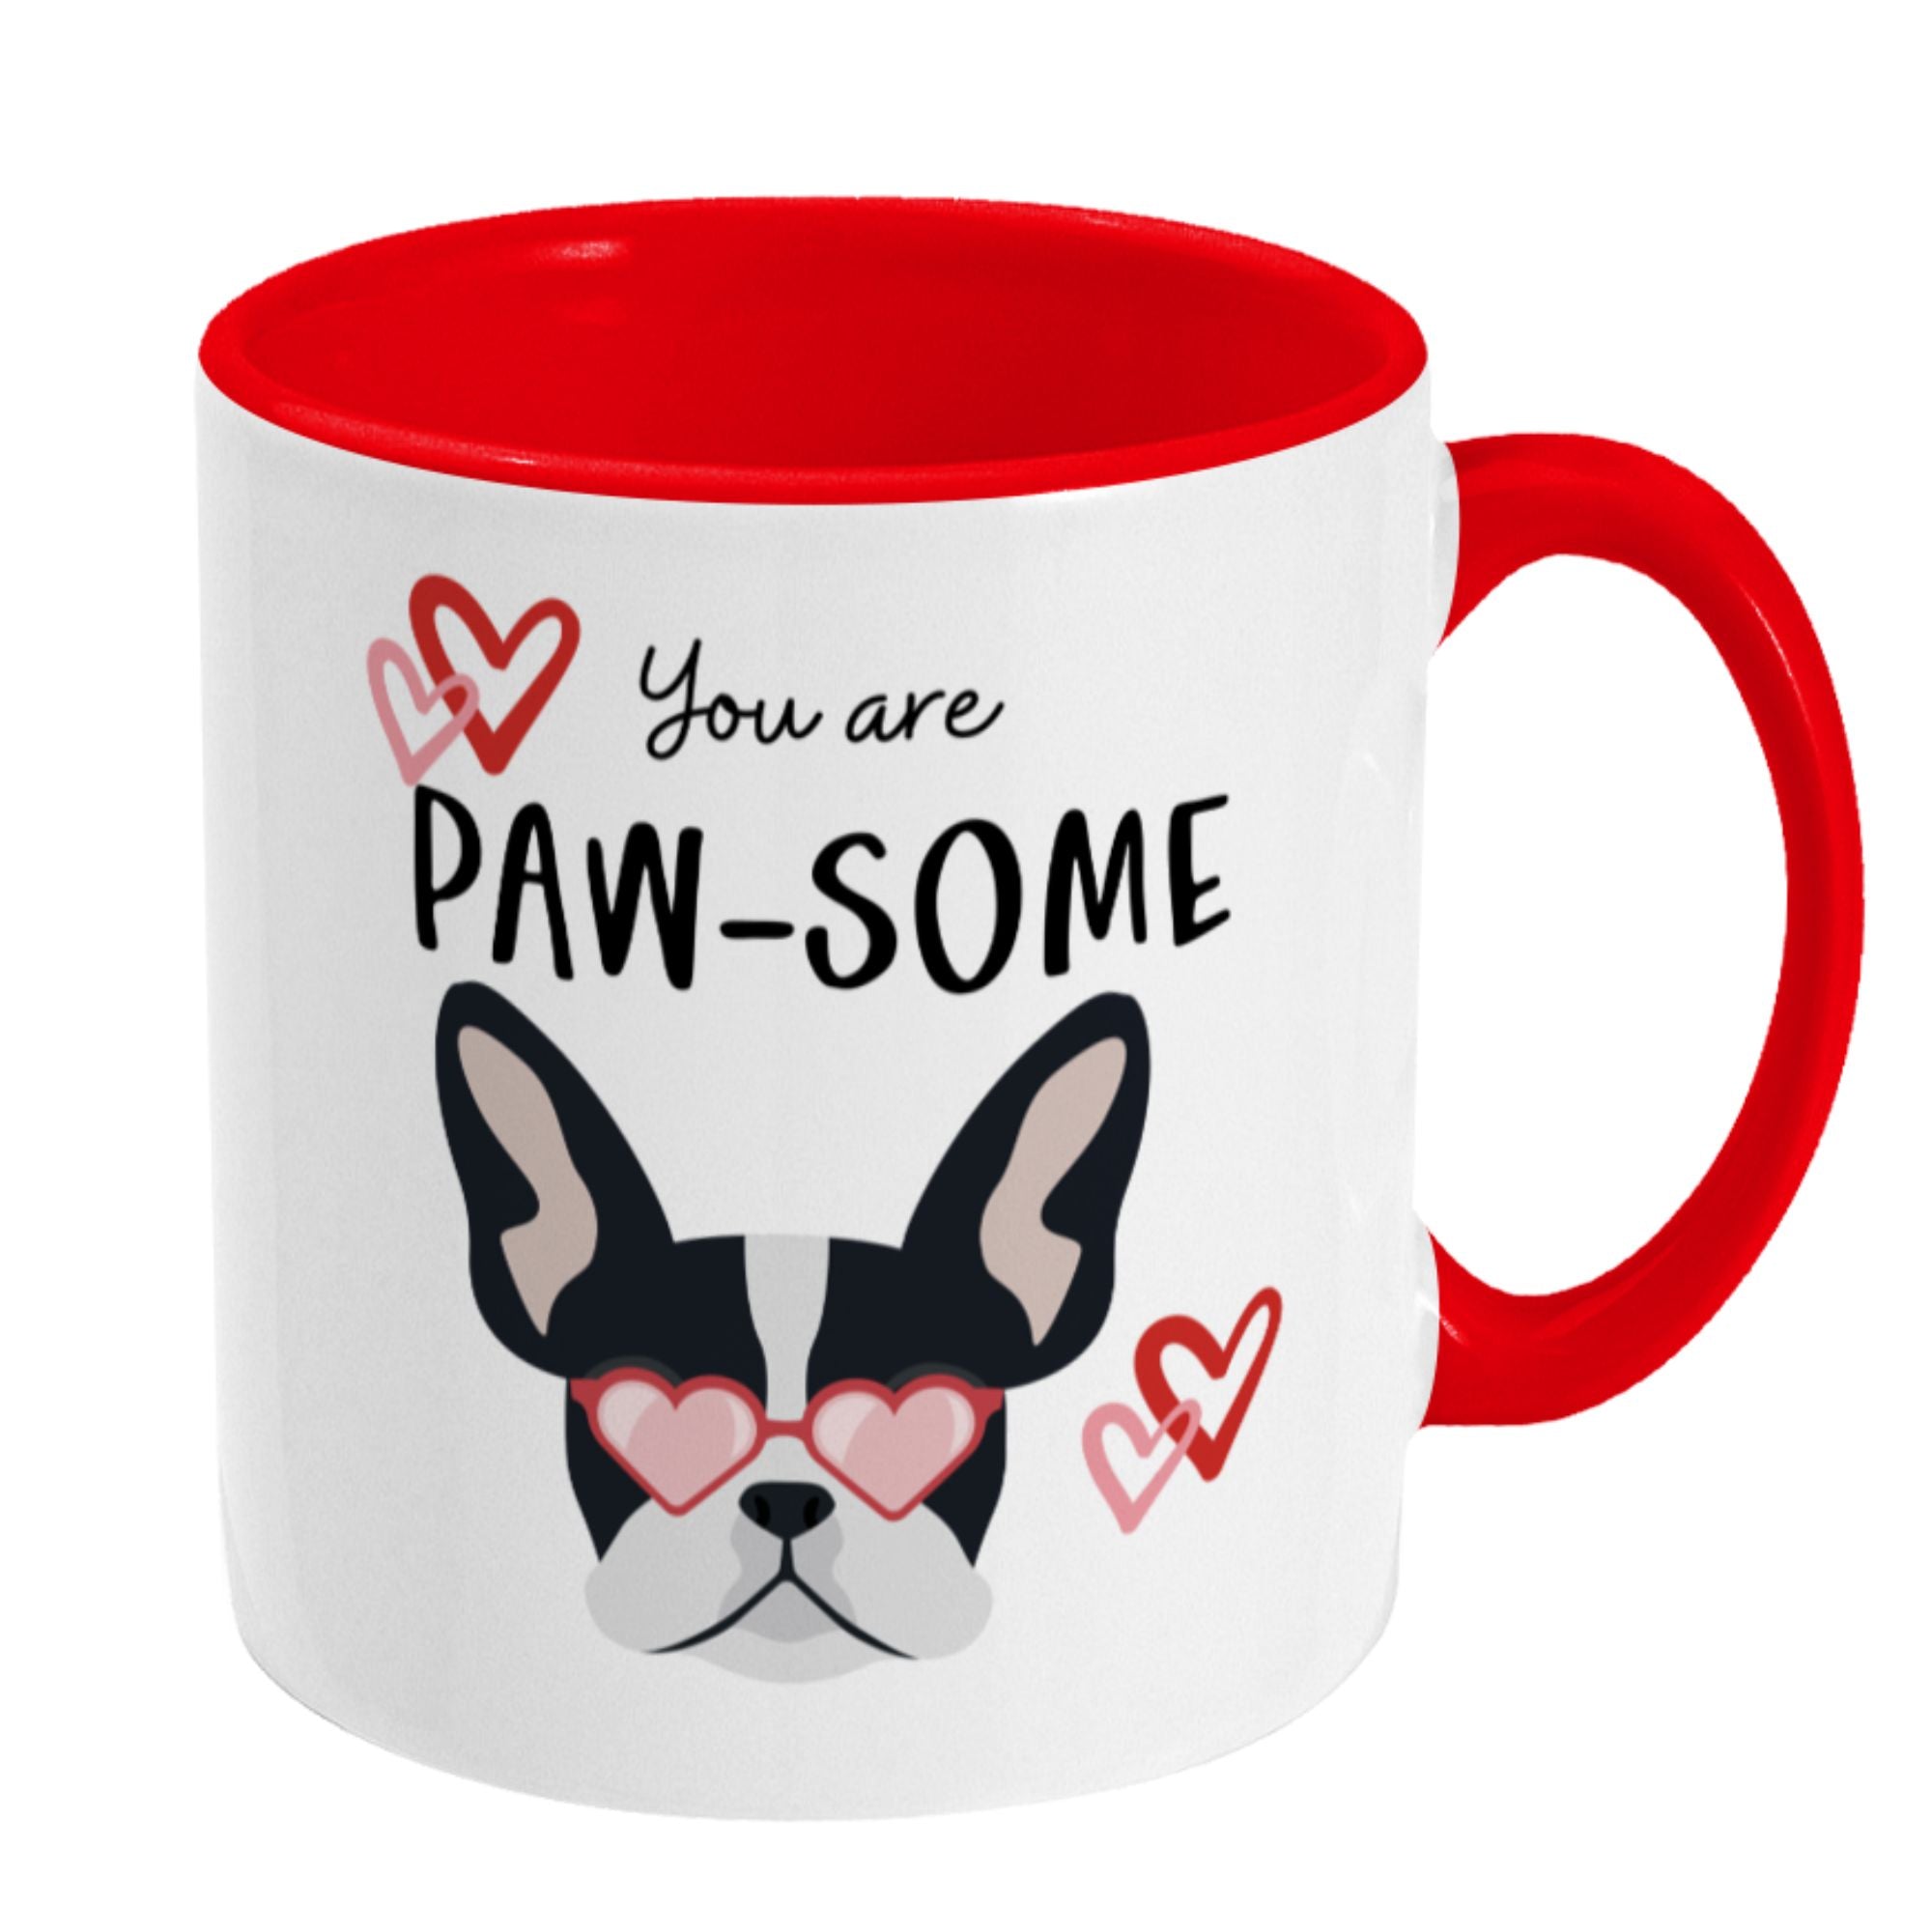 You are Paw-some Mug French Bulldog Mug - Sweetie